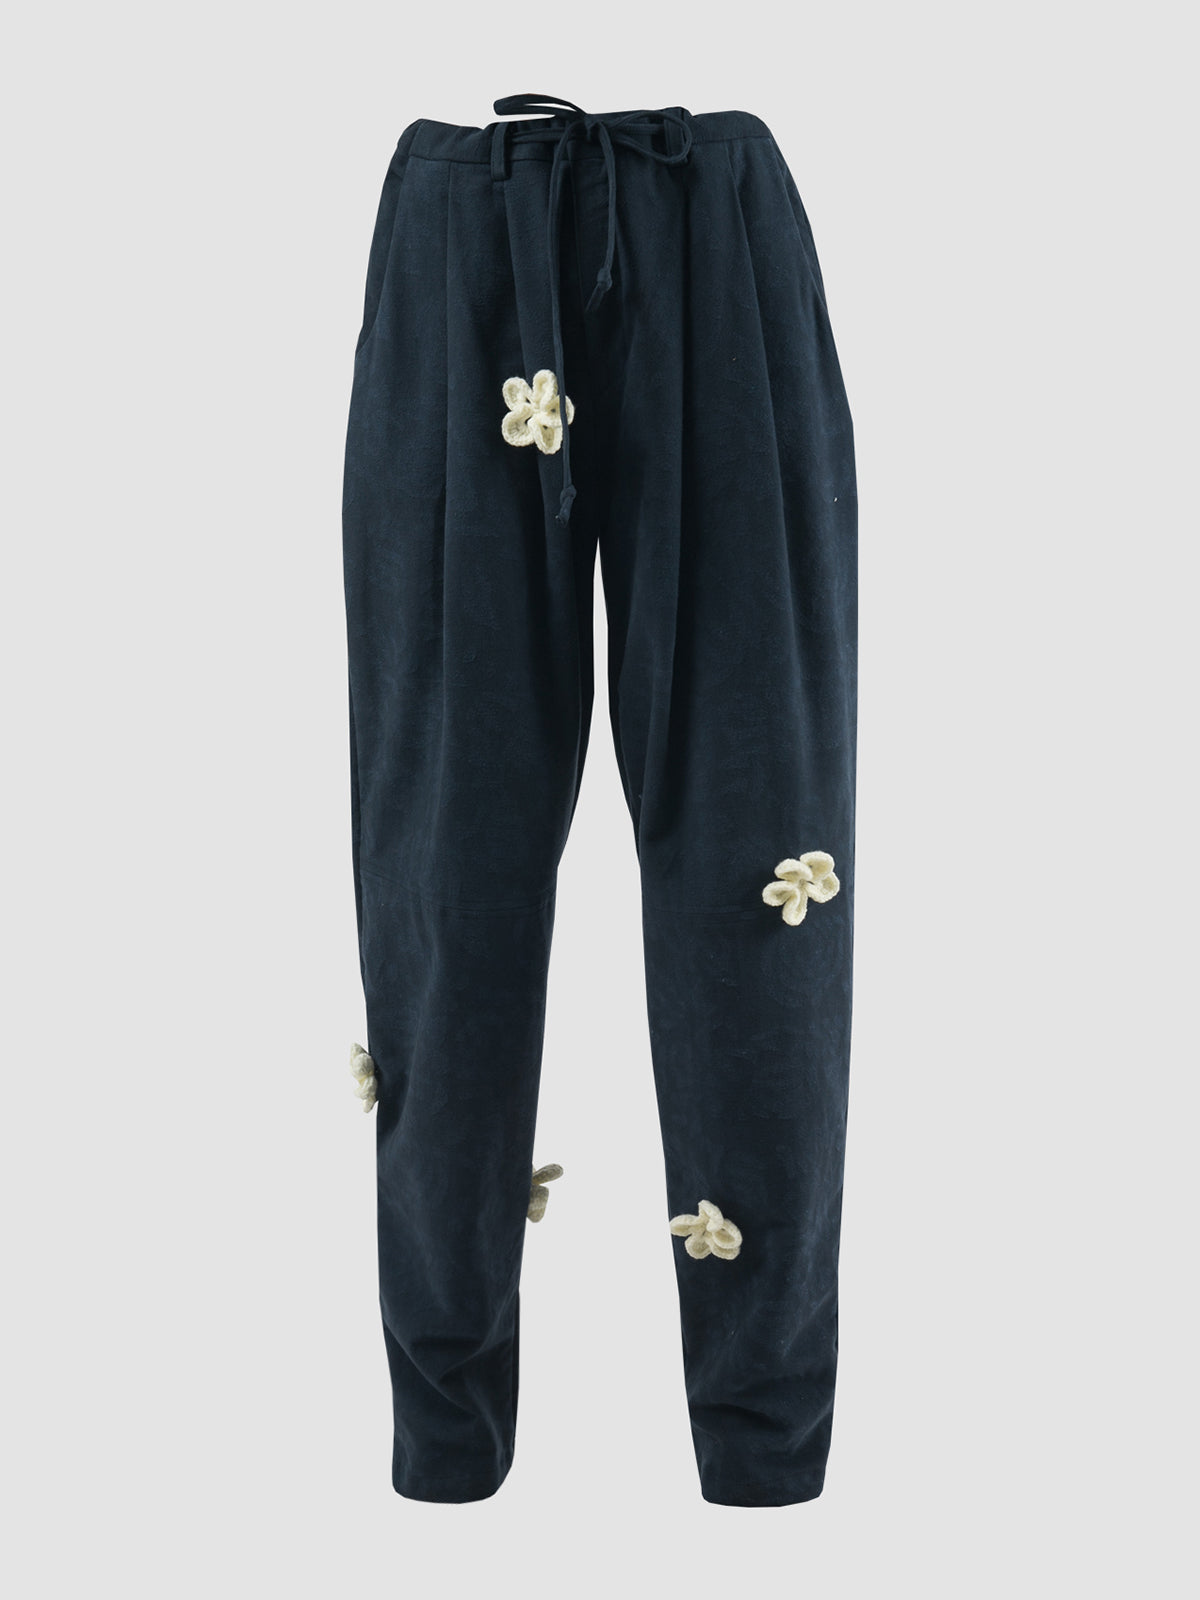 Velvet blue loose fit pants with crochet flowers